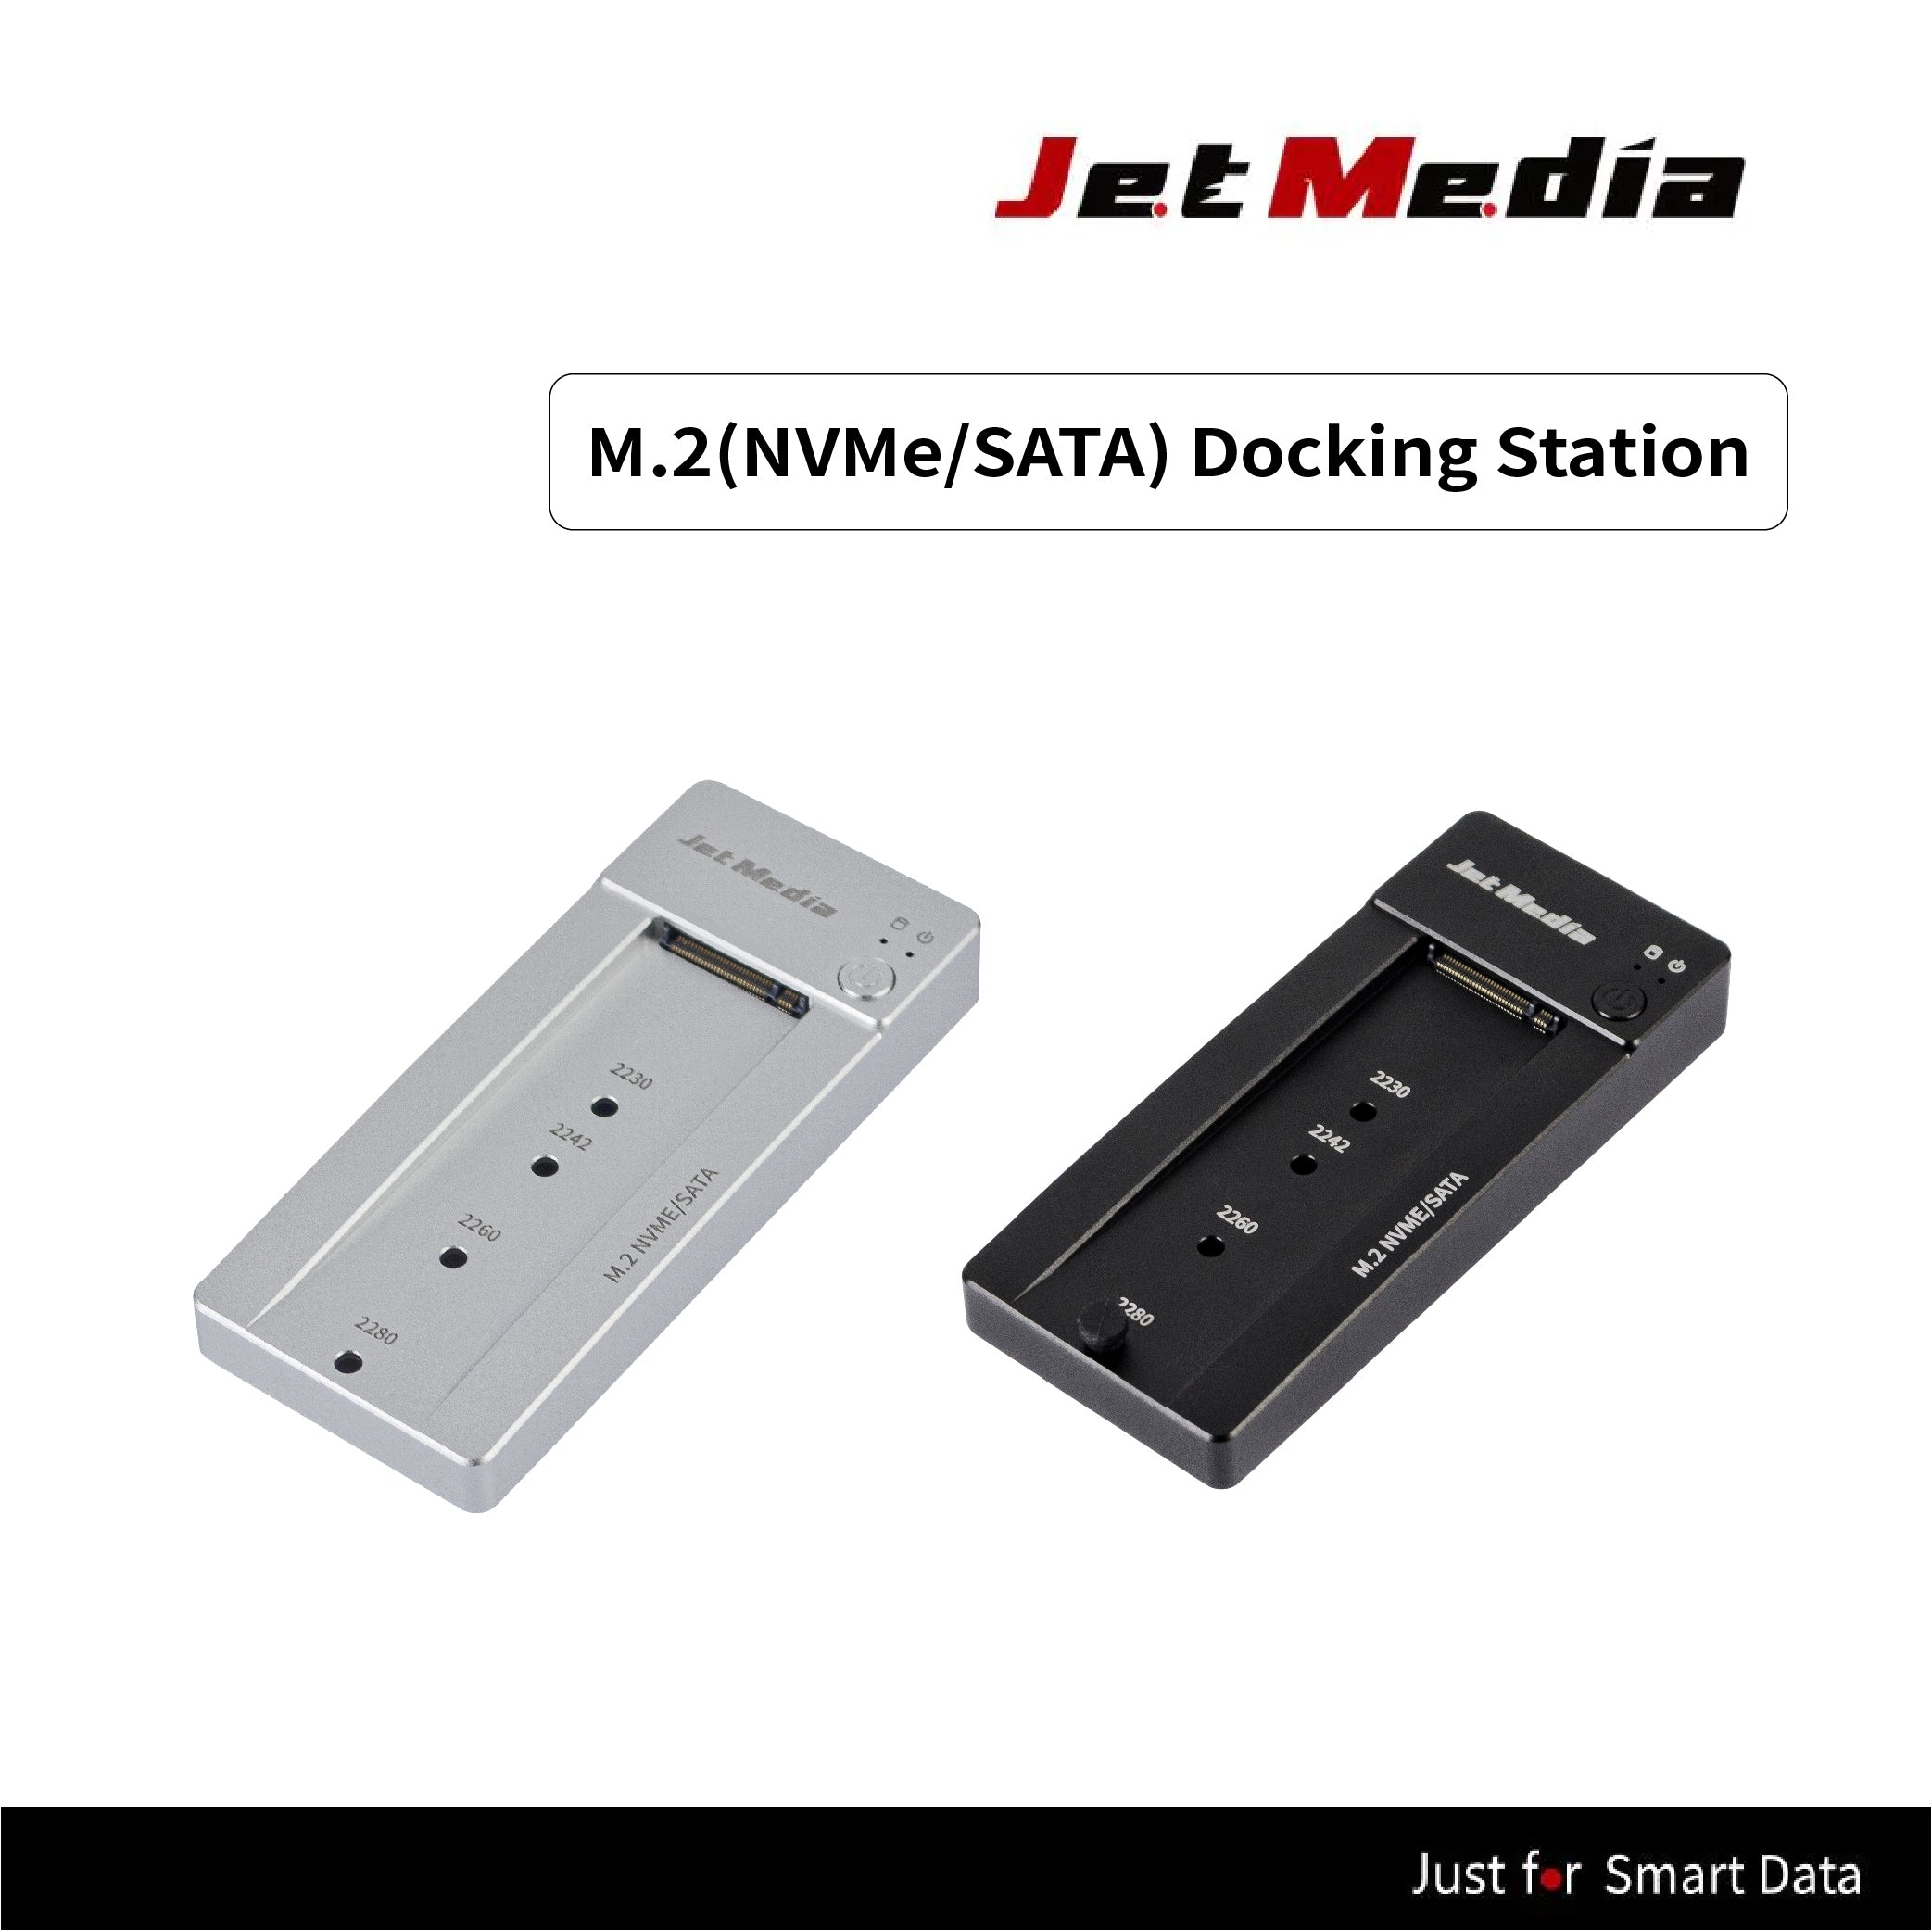 JetMedia JM-D1 M.2 NVMe/SATA 雙訊號硬碟底座_ 銀色